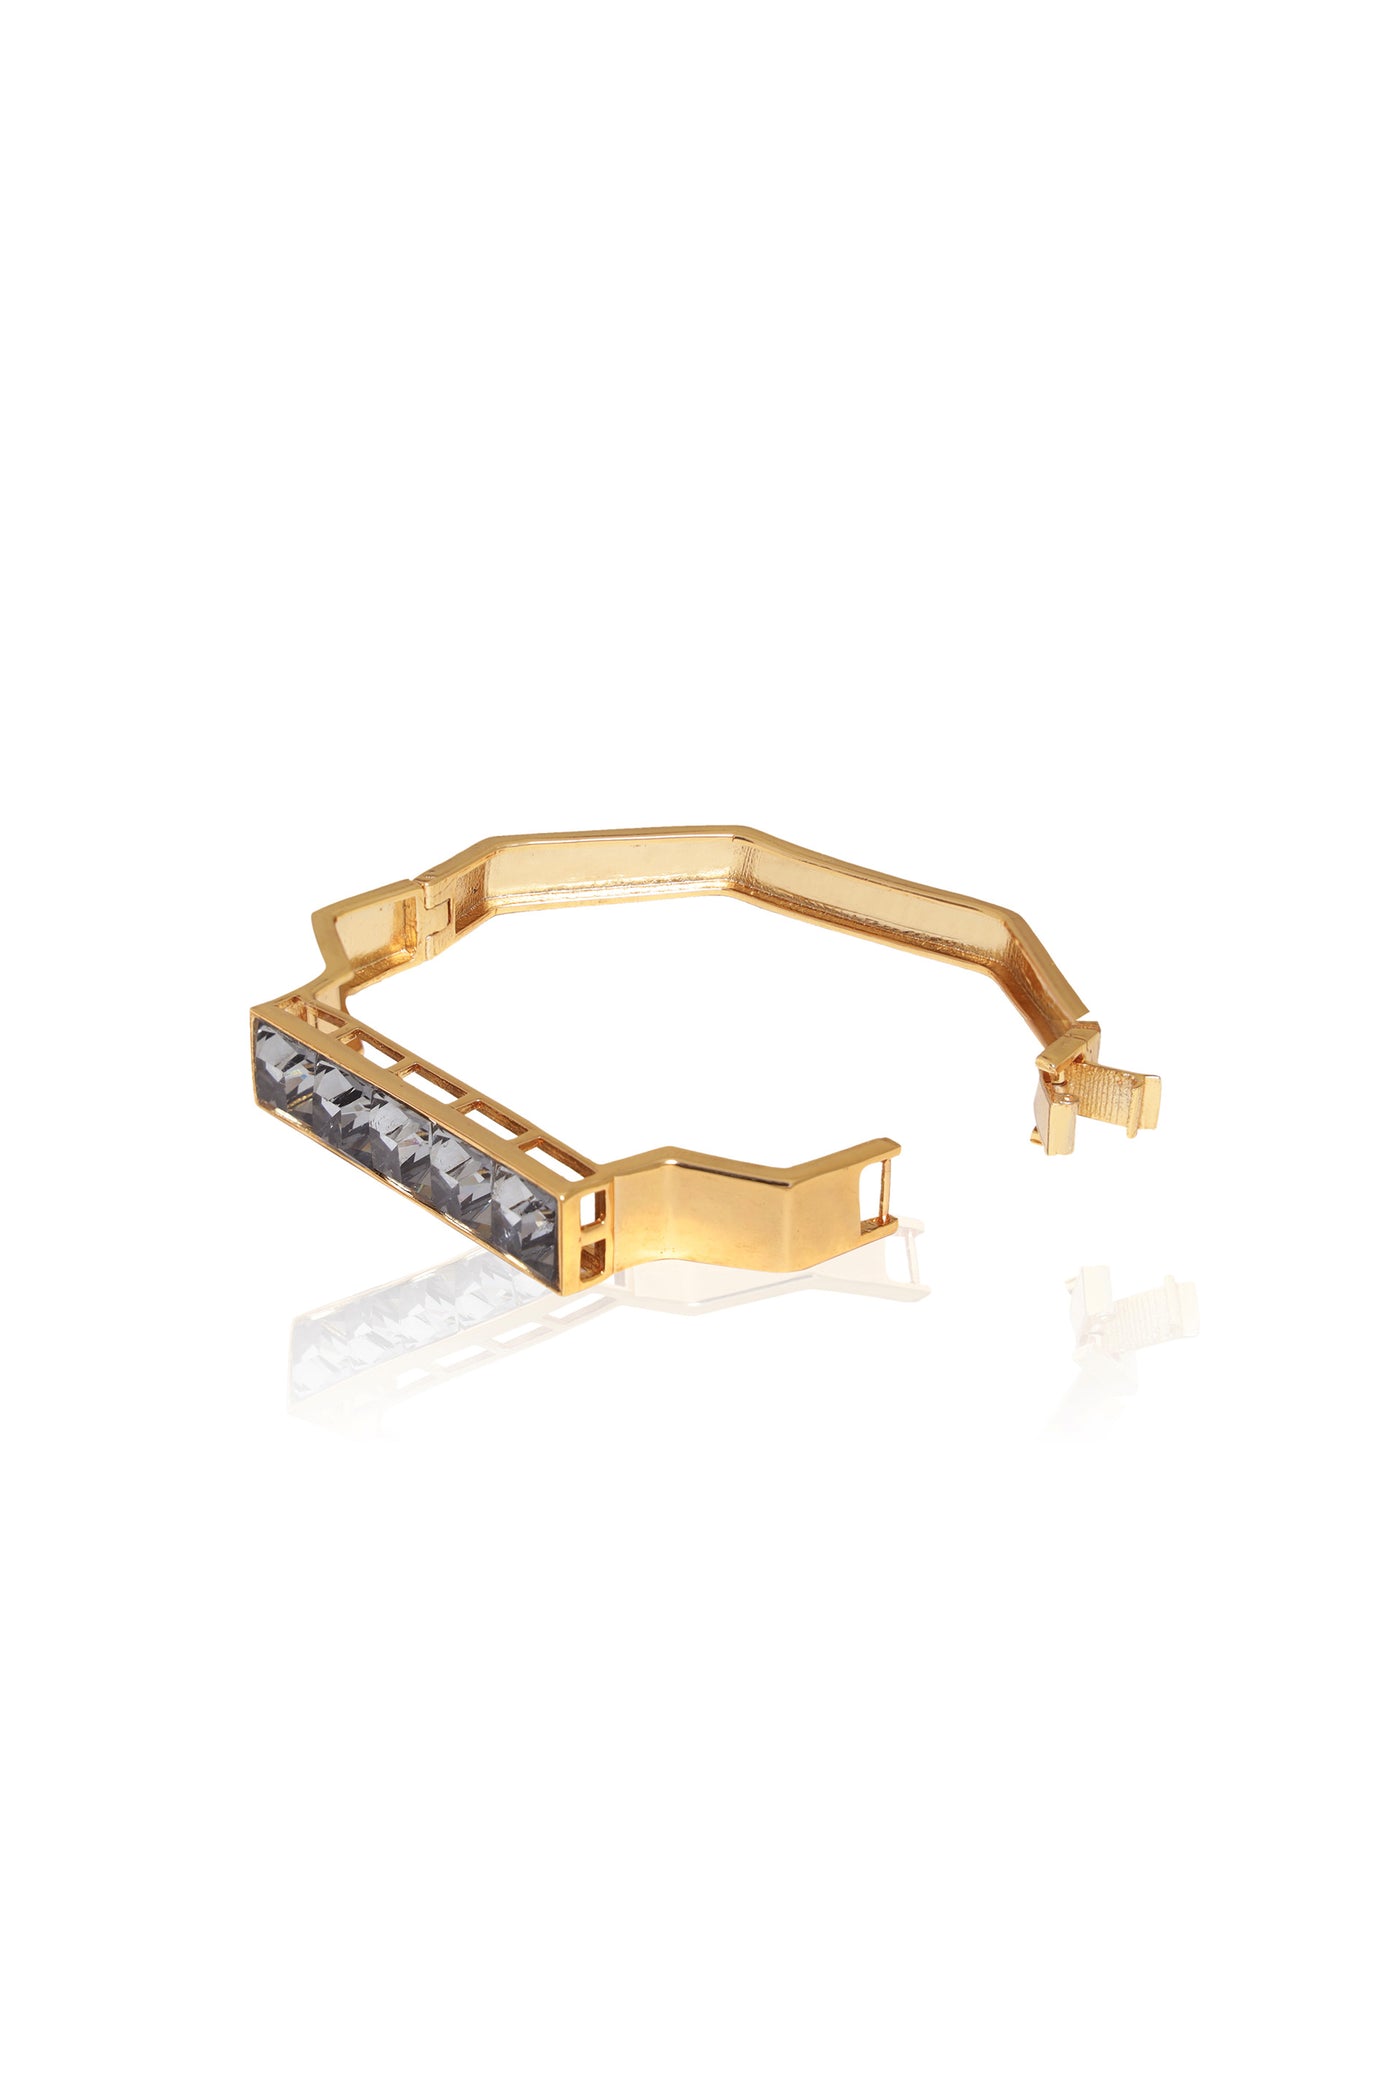 esme golden tan bracelet black on gold fashion imitation jewellery indian designer wear online shopping melange singapore